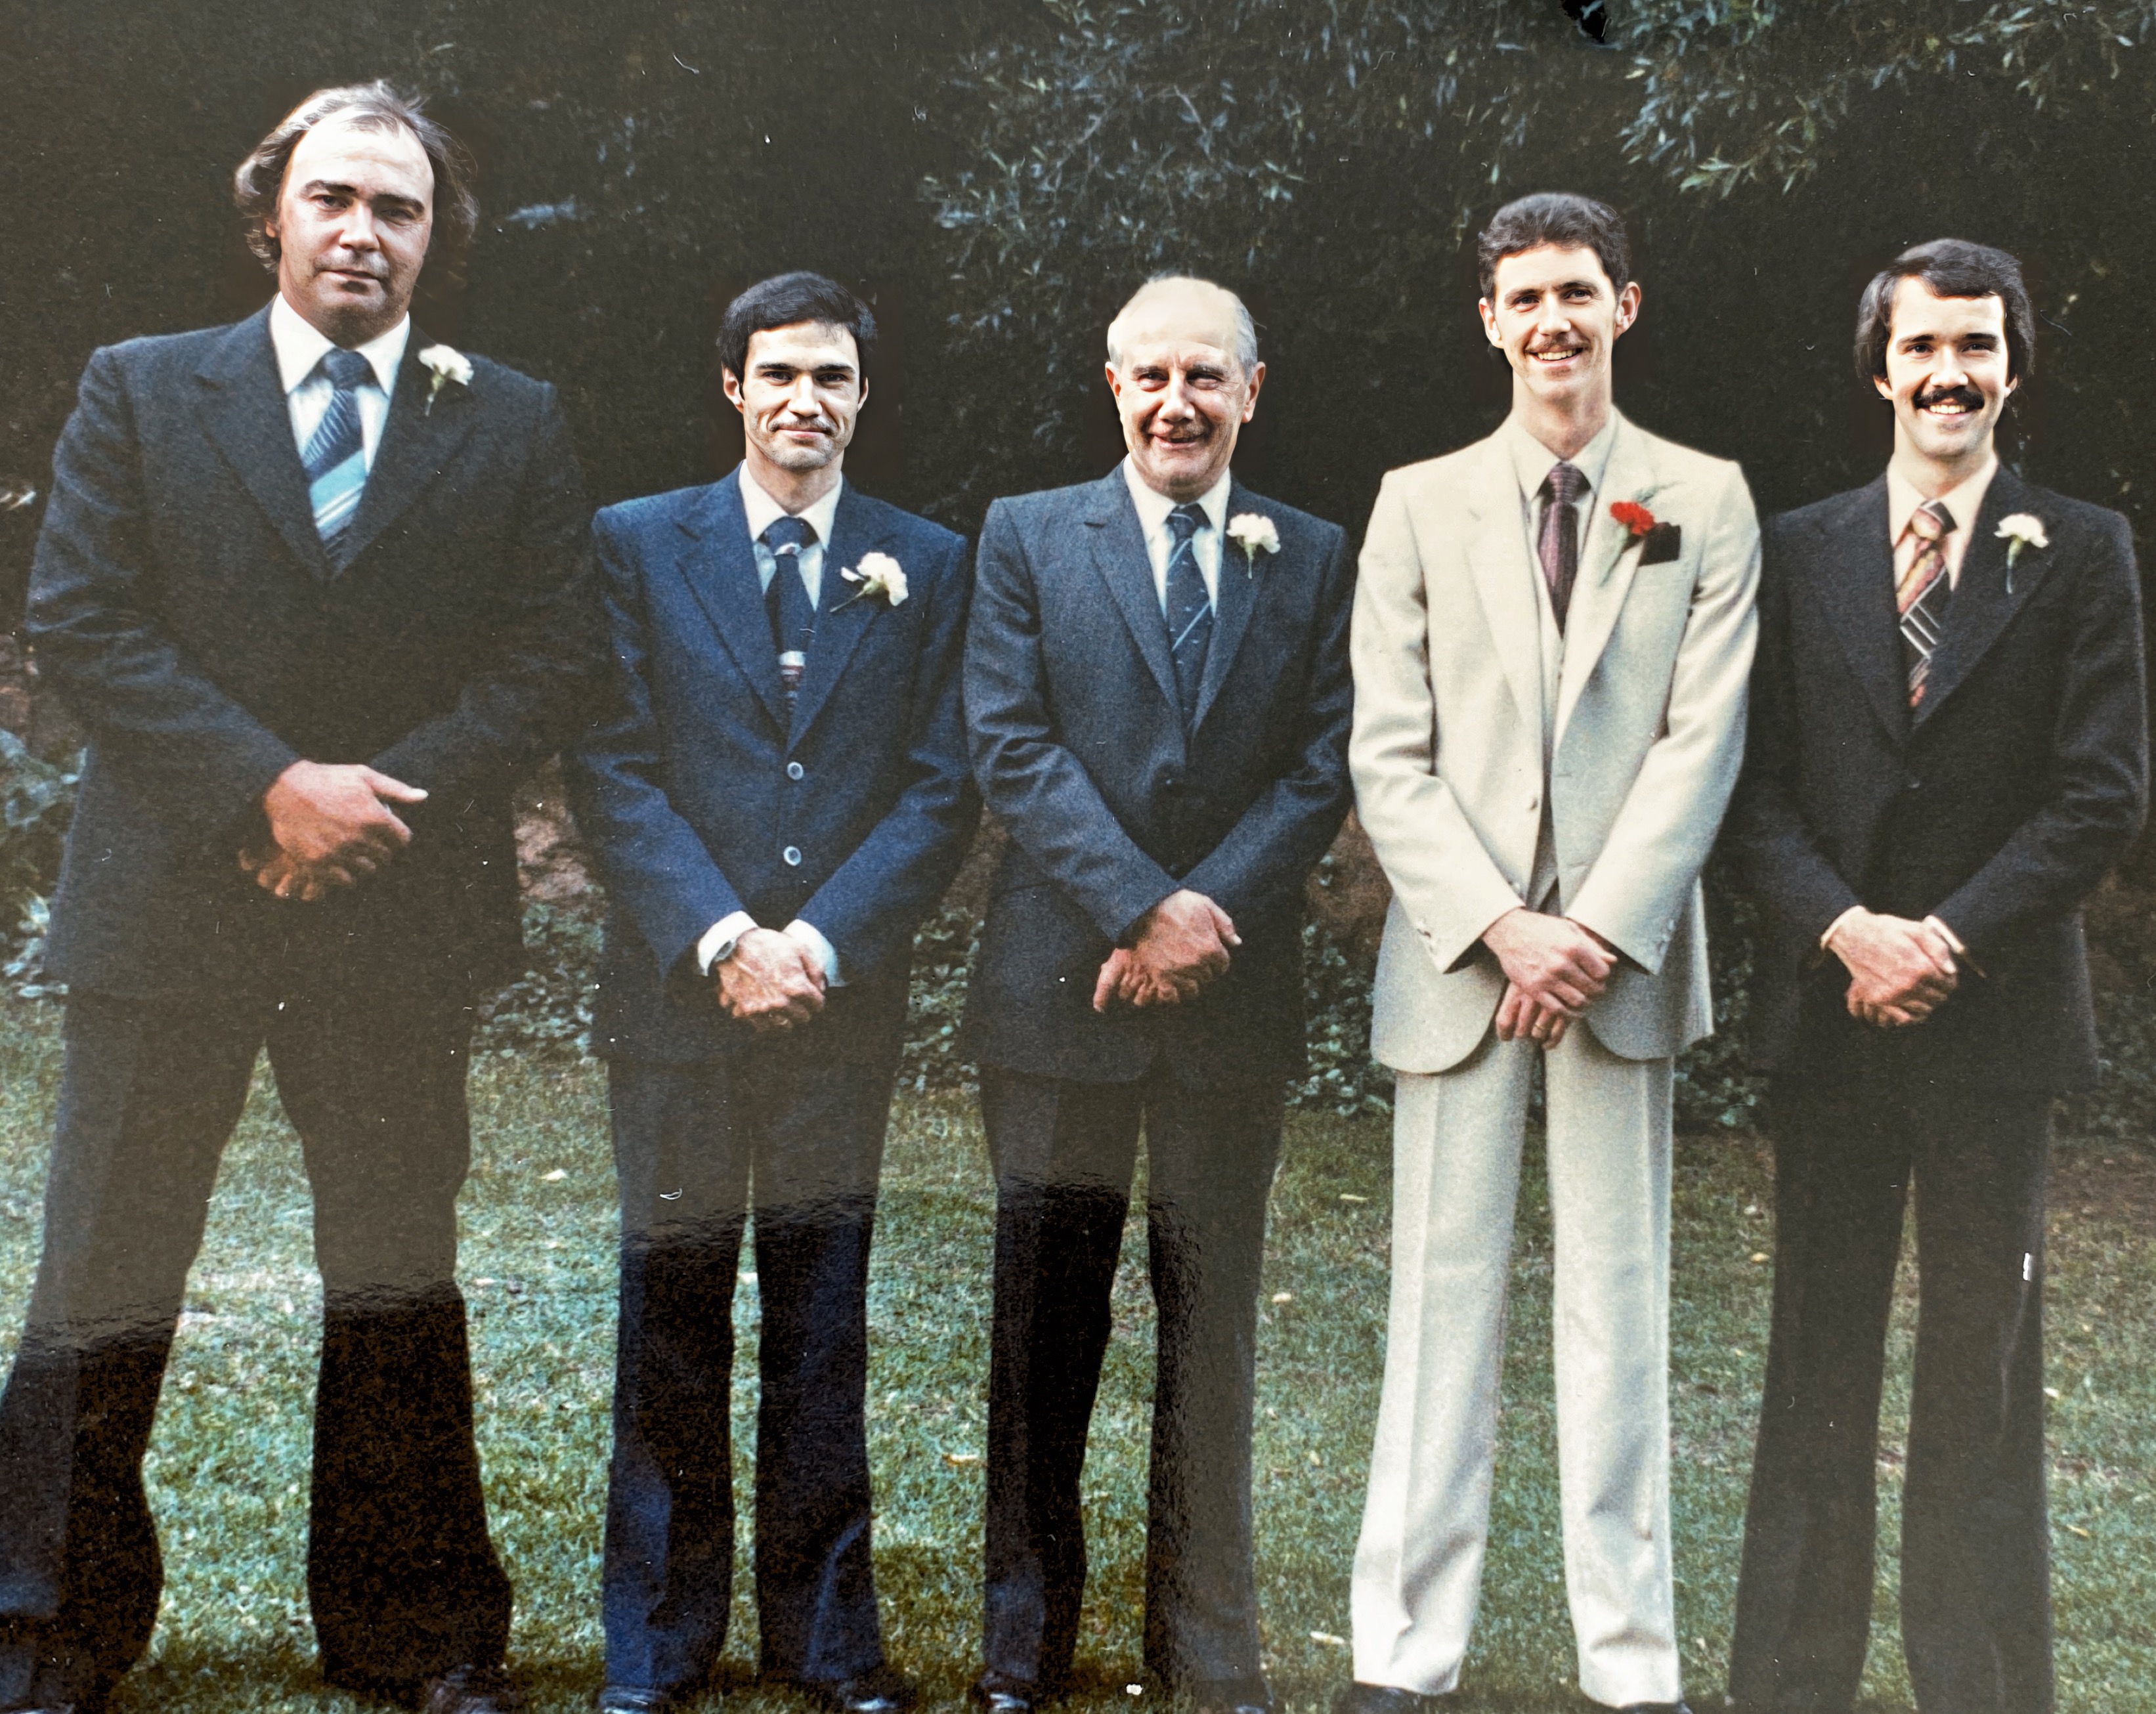 The Jonsson men circa 1980